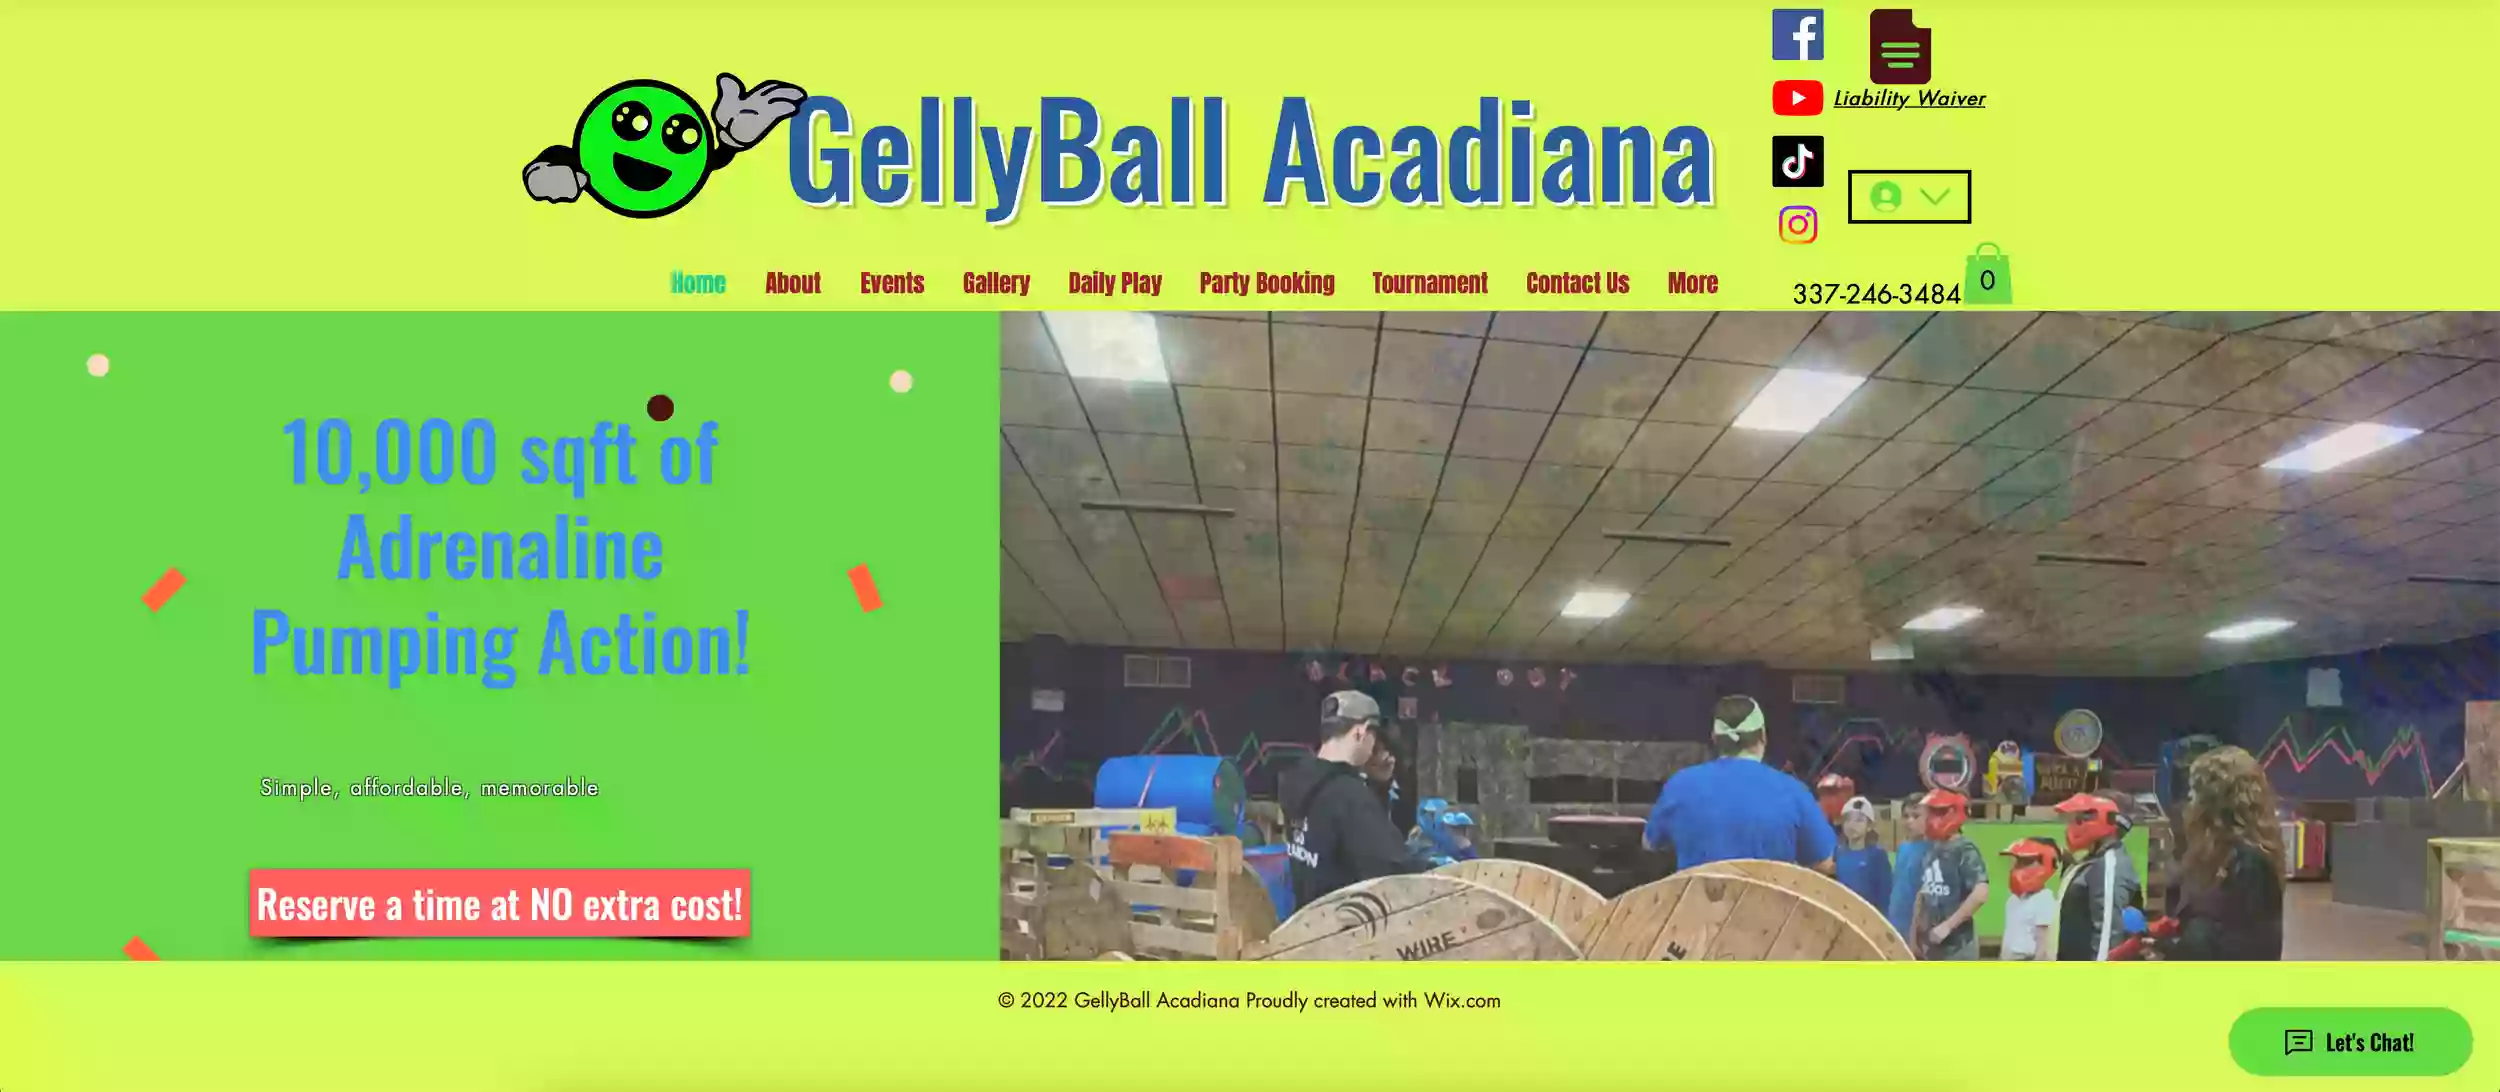 GellyBall Acadiana